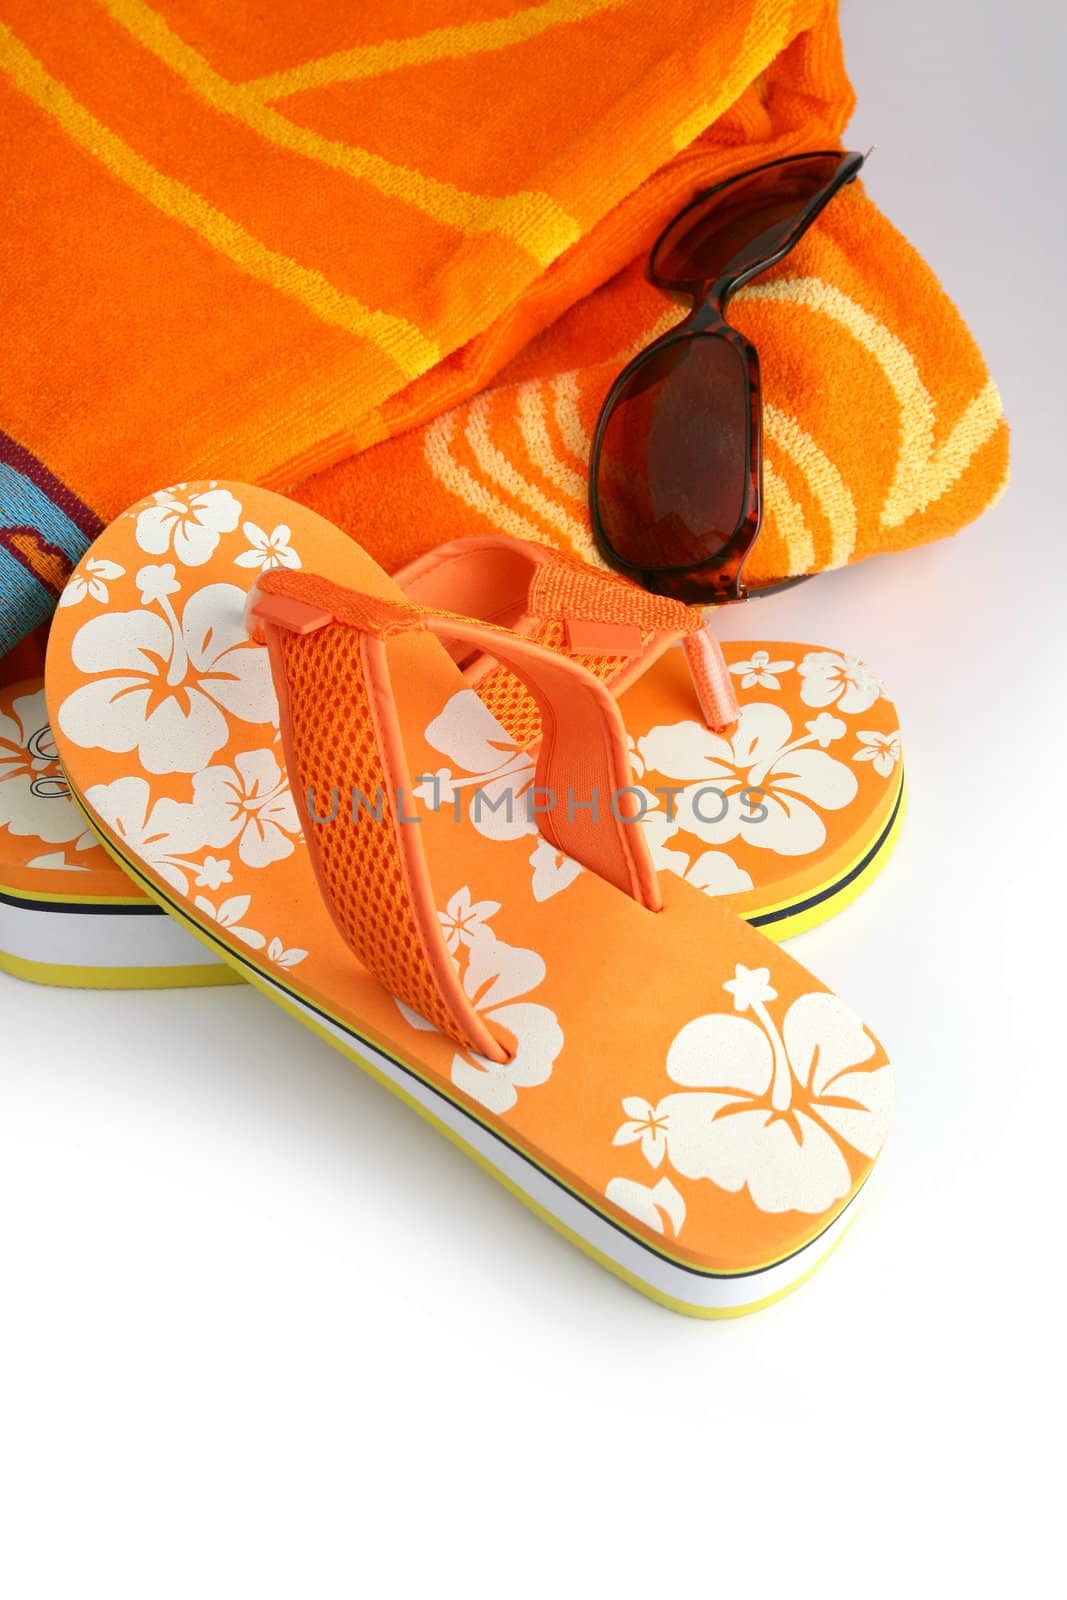 Flip-flops, sunglasses and towel